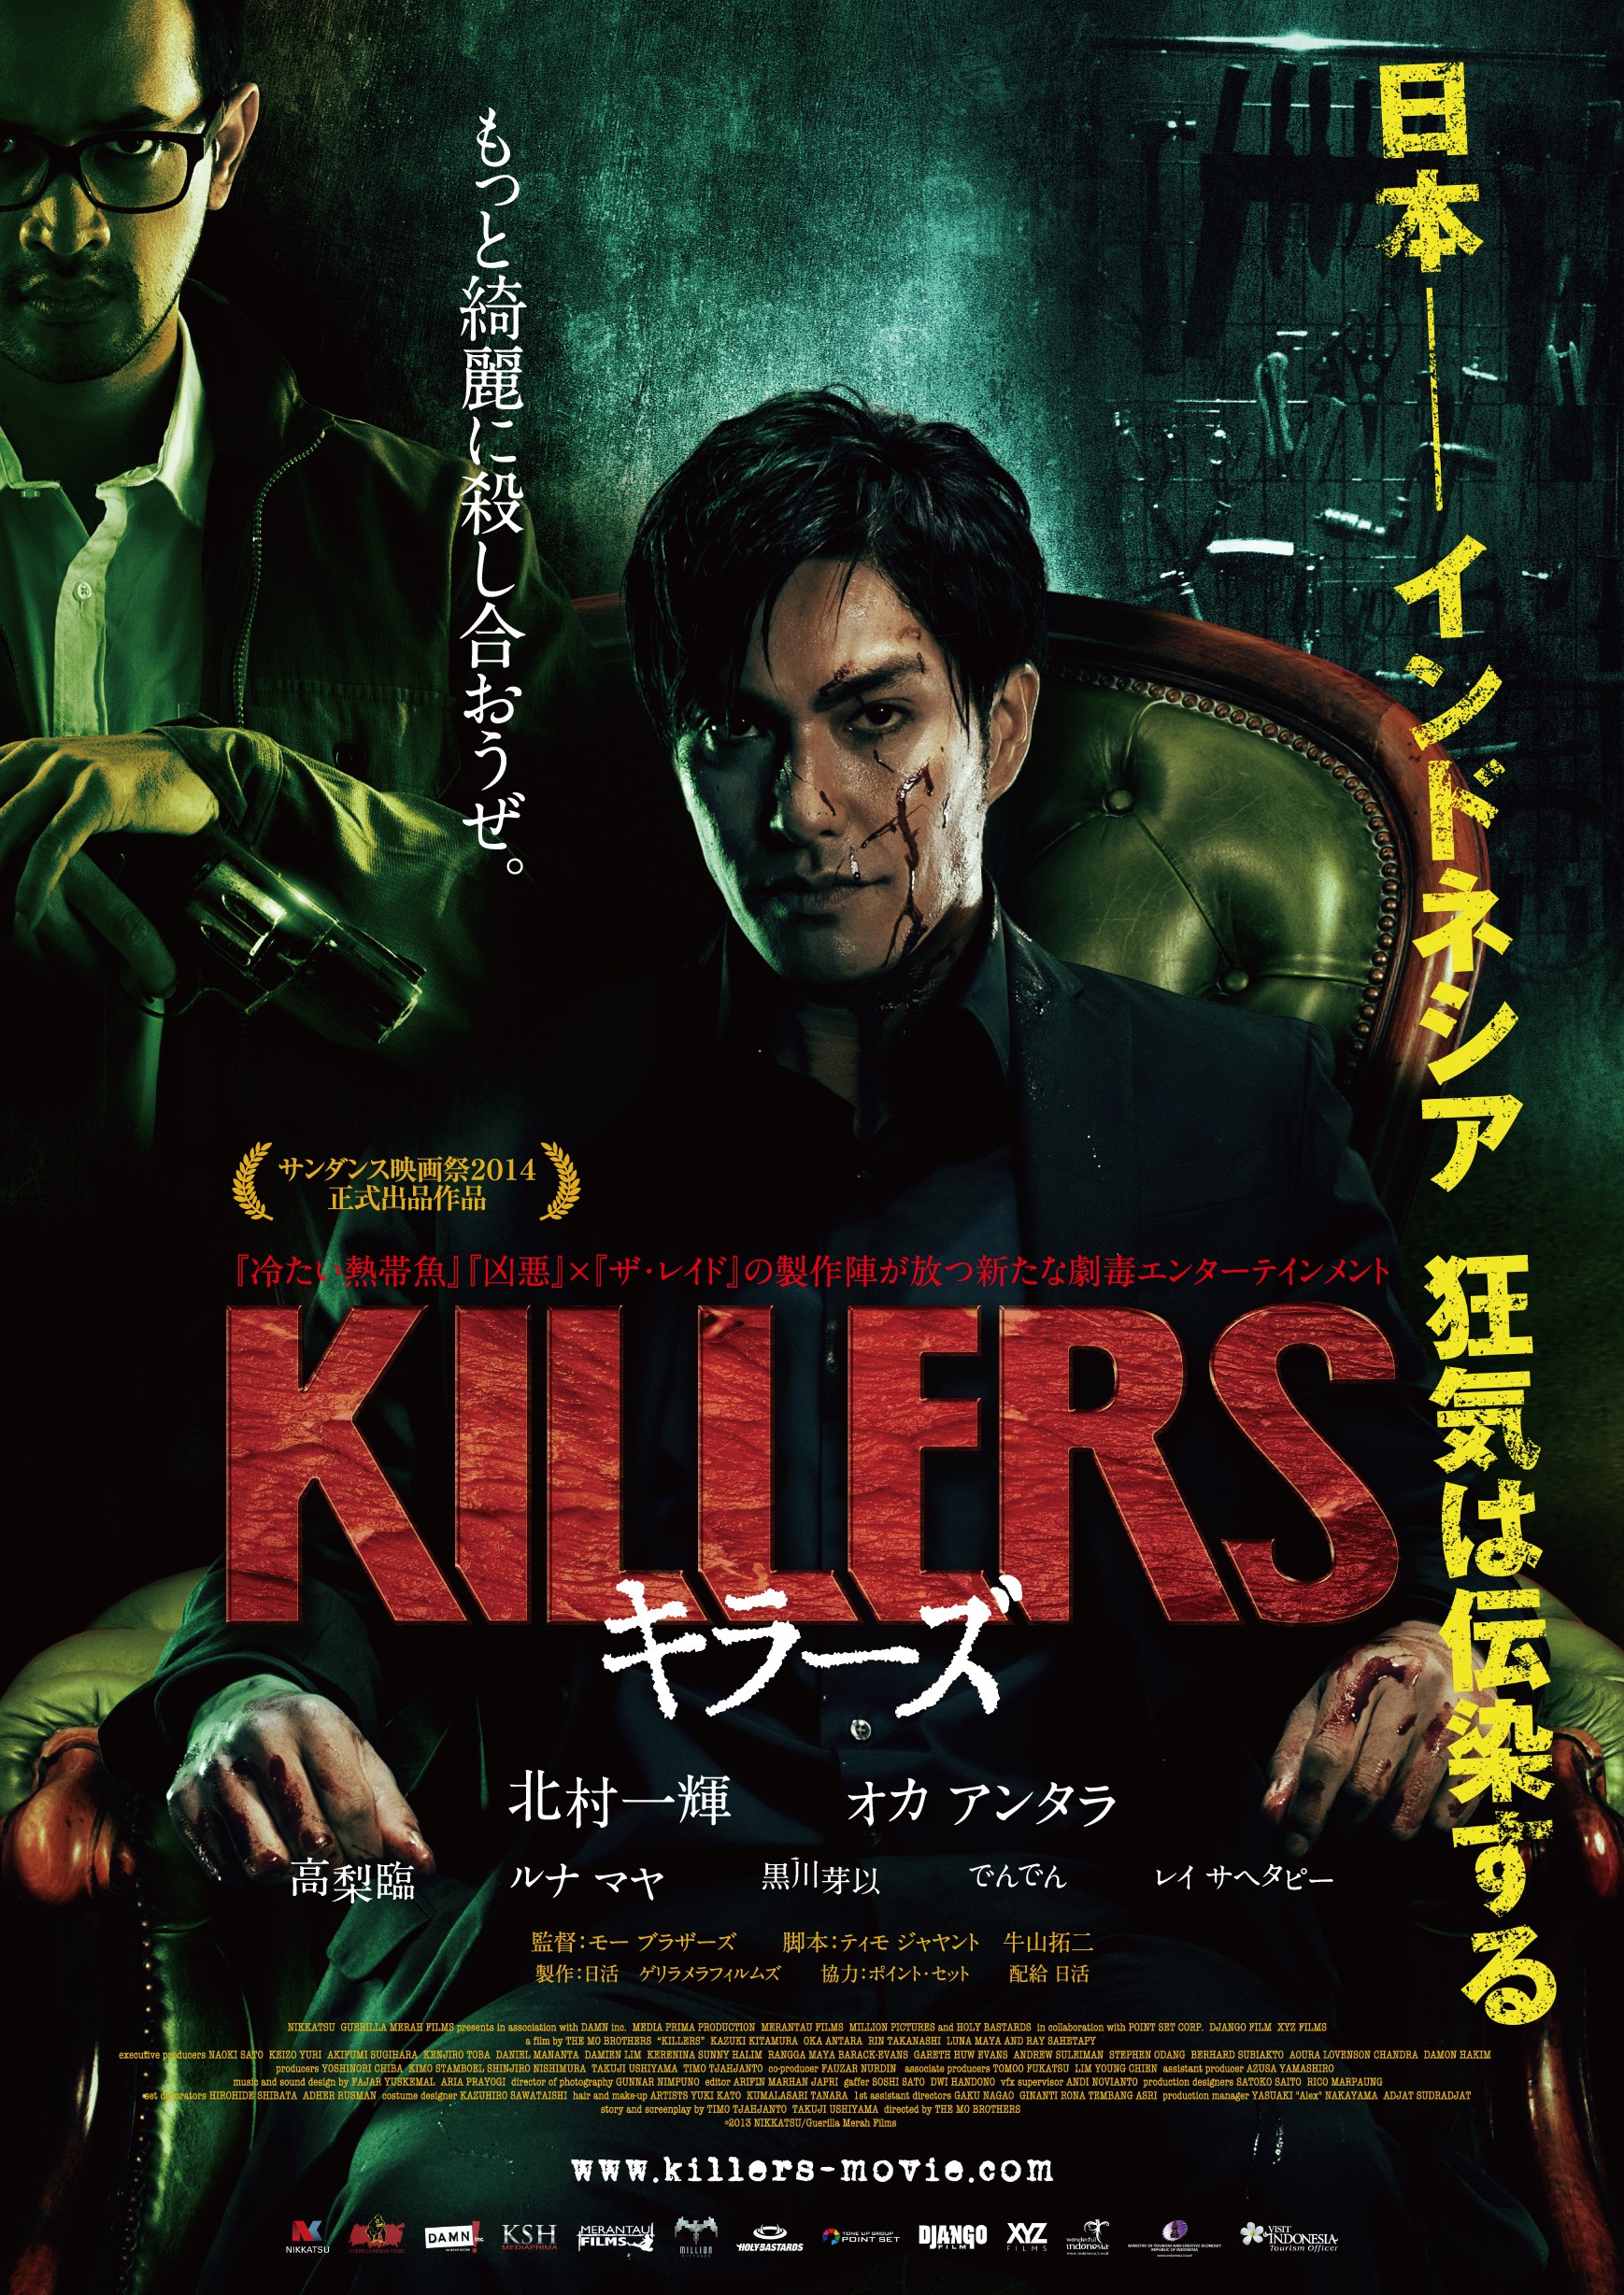 Mega Sized Movie Poster Image for Killers 